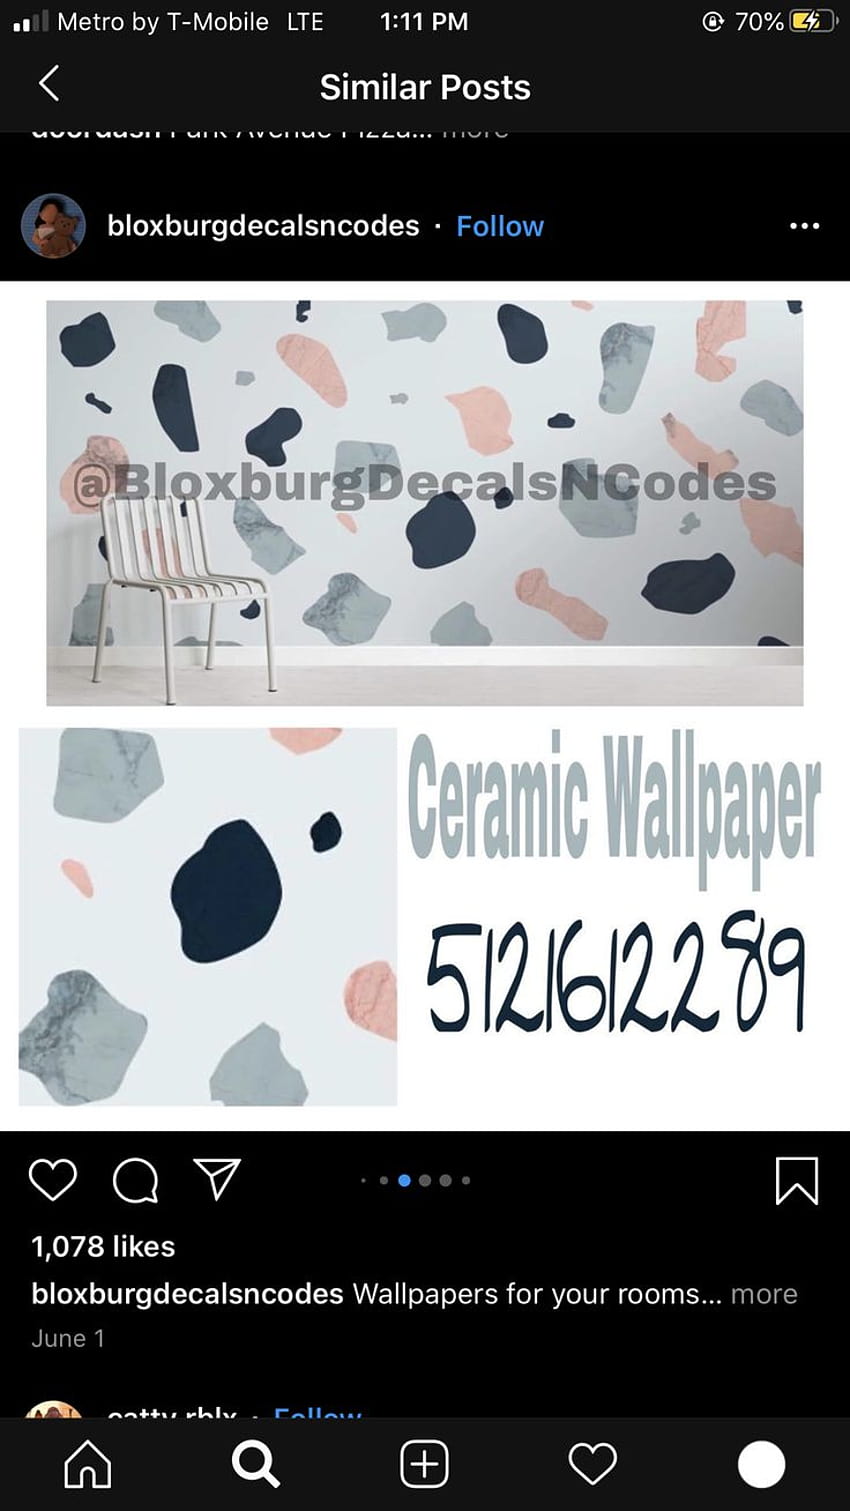 Bloxburg decal codes HD wallpapers